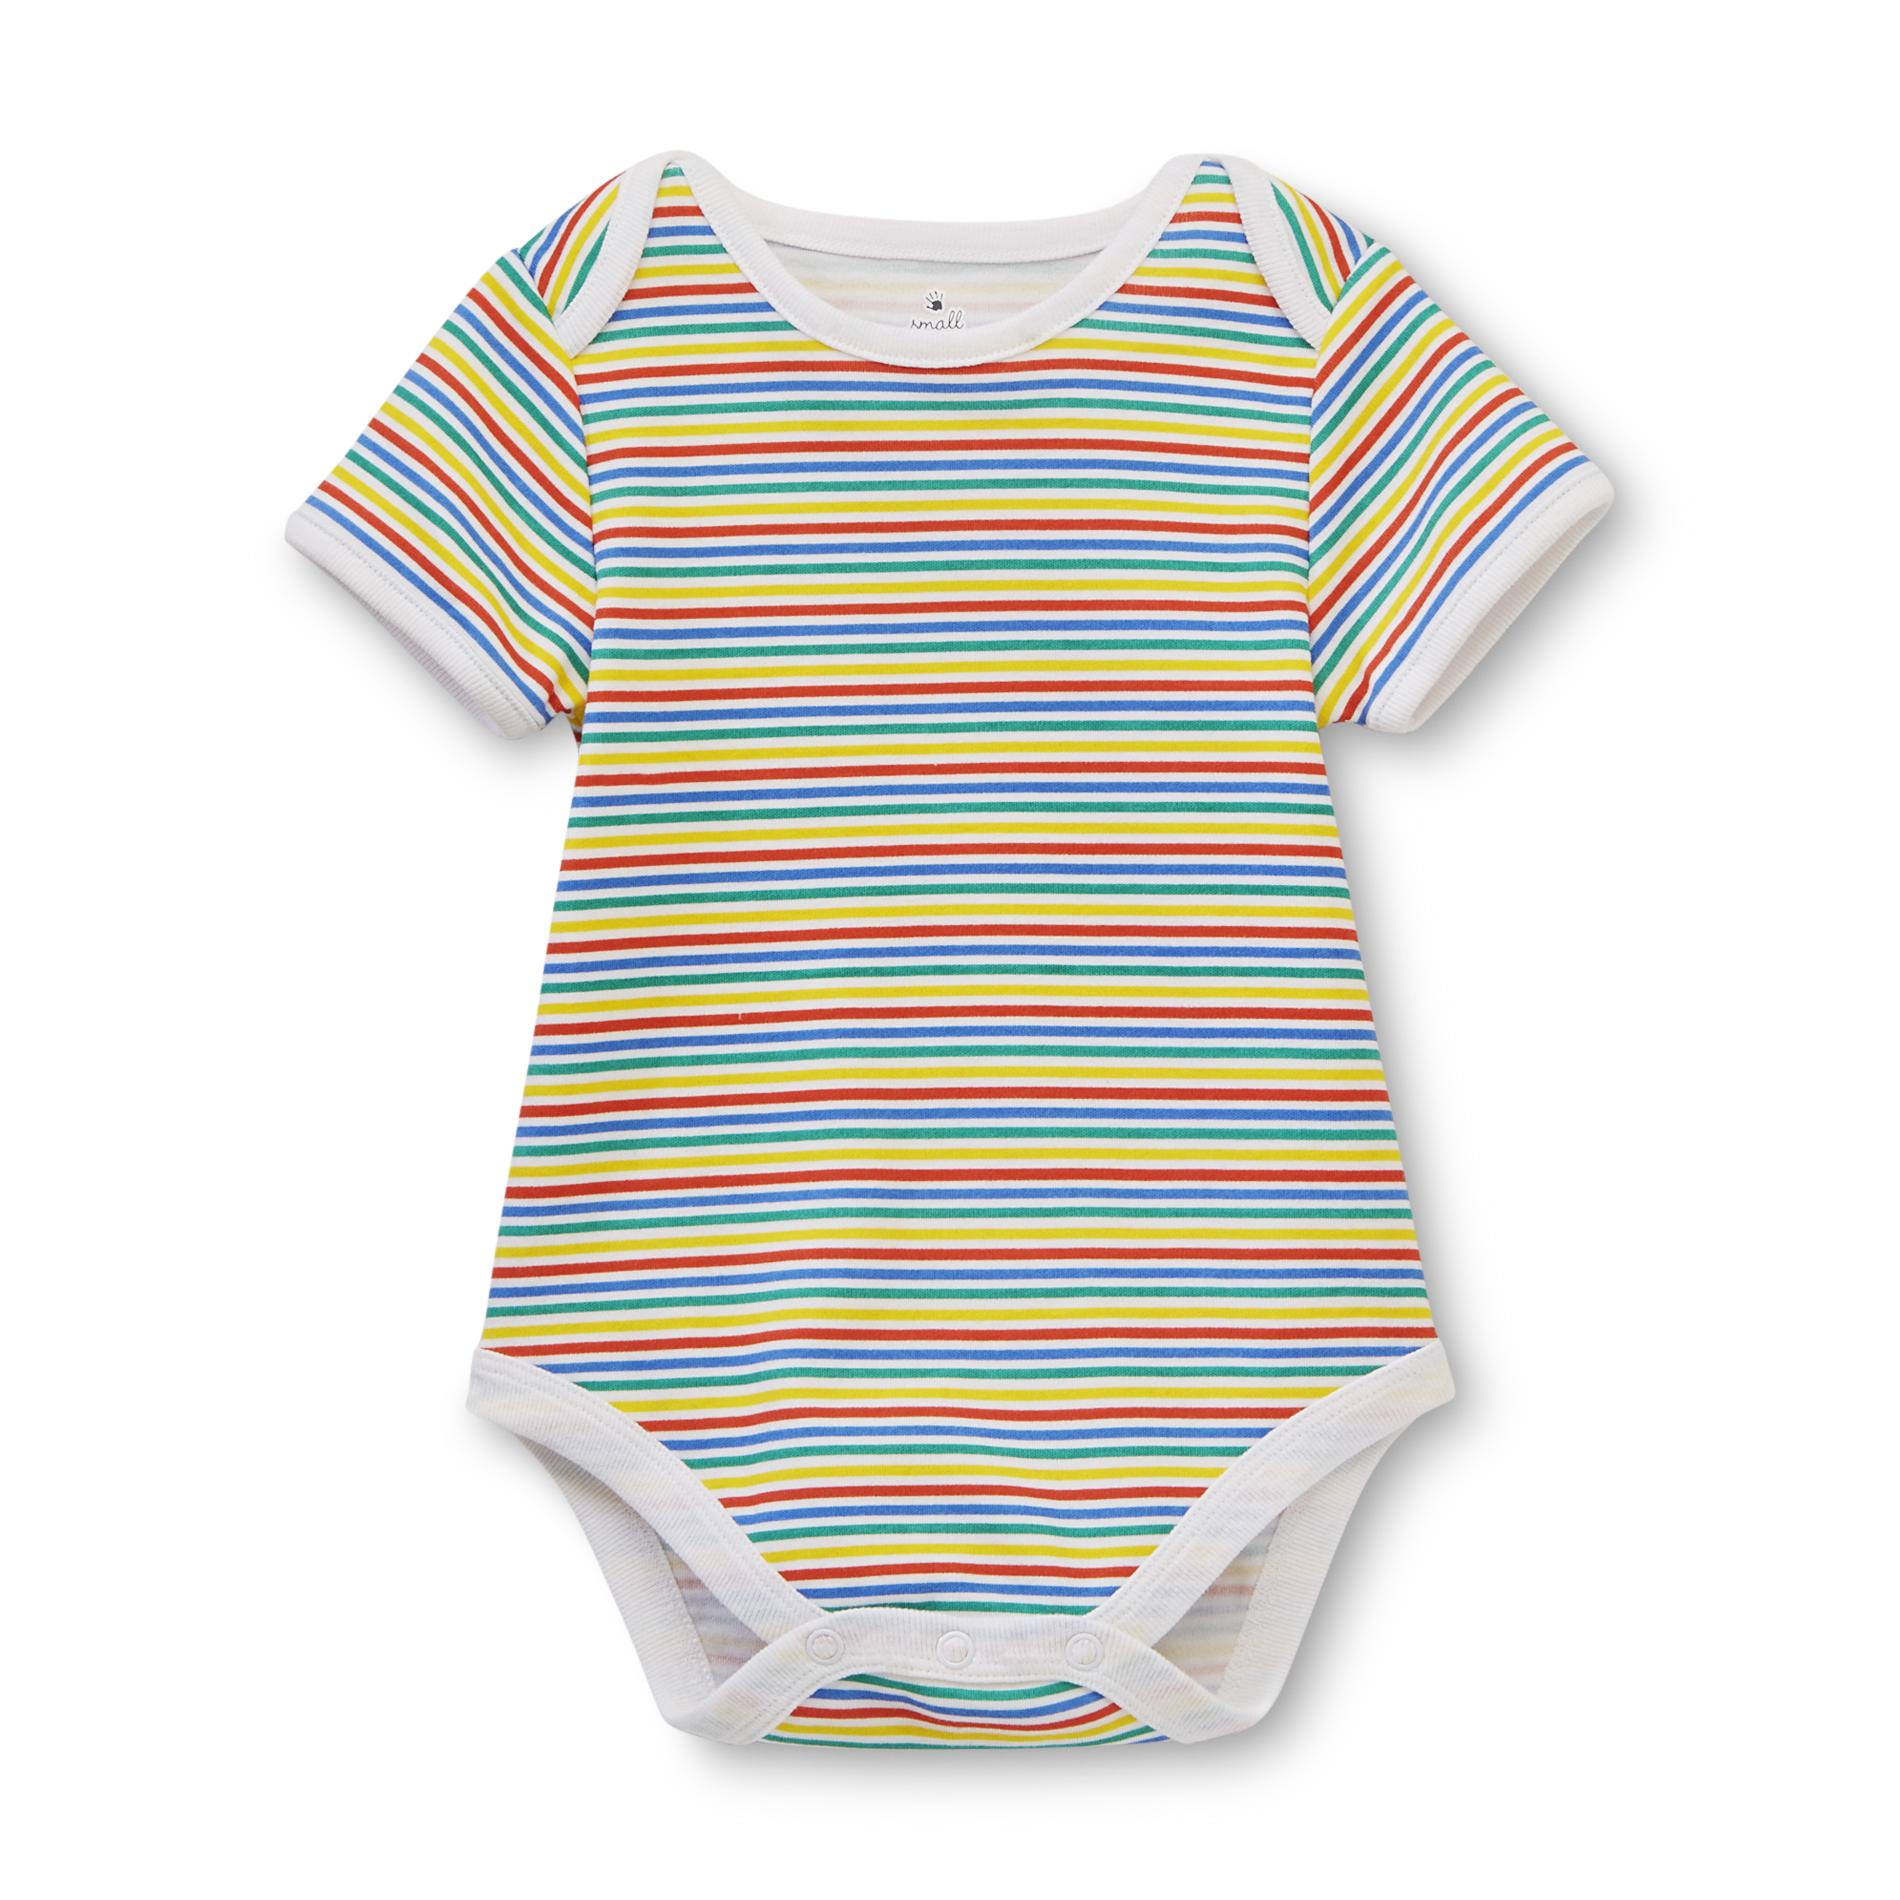 Small Wonders Newborn Boy's Short-Sleeve Bodysuit - Striped